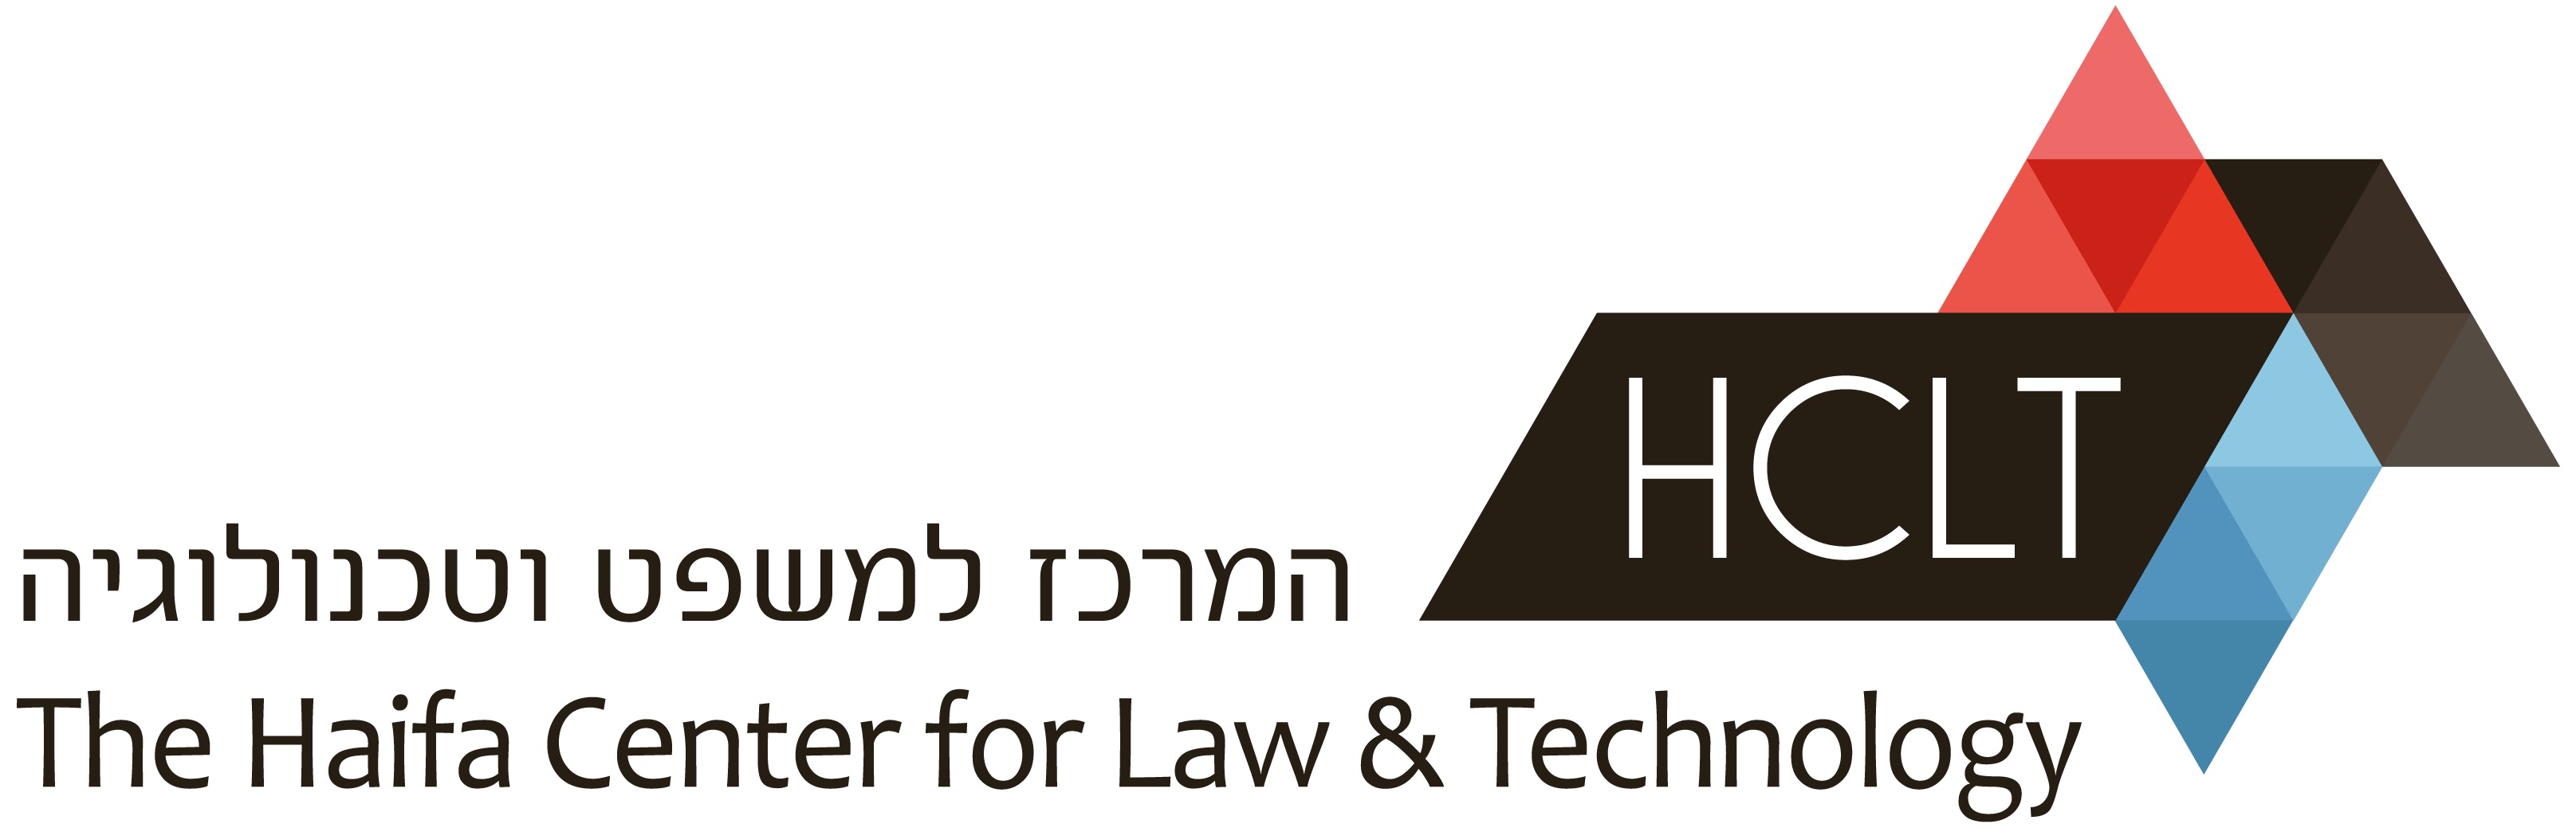 The Haifa Center for Law & Technology logo 